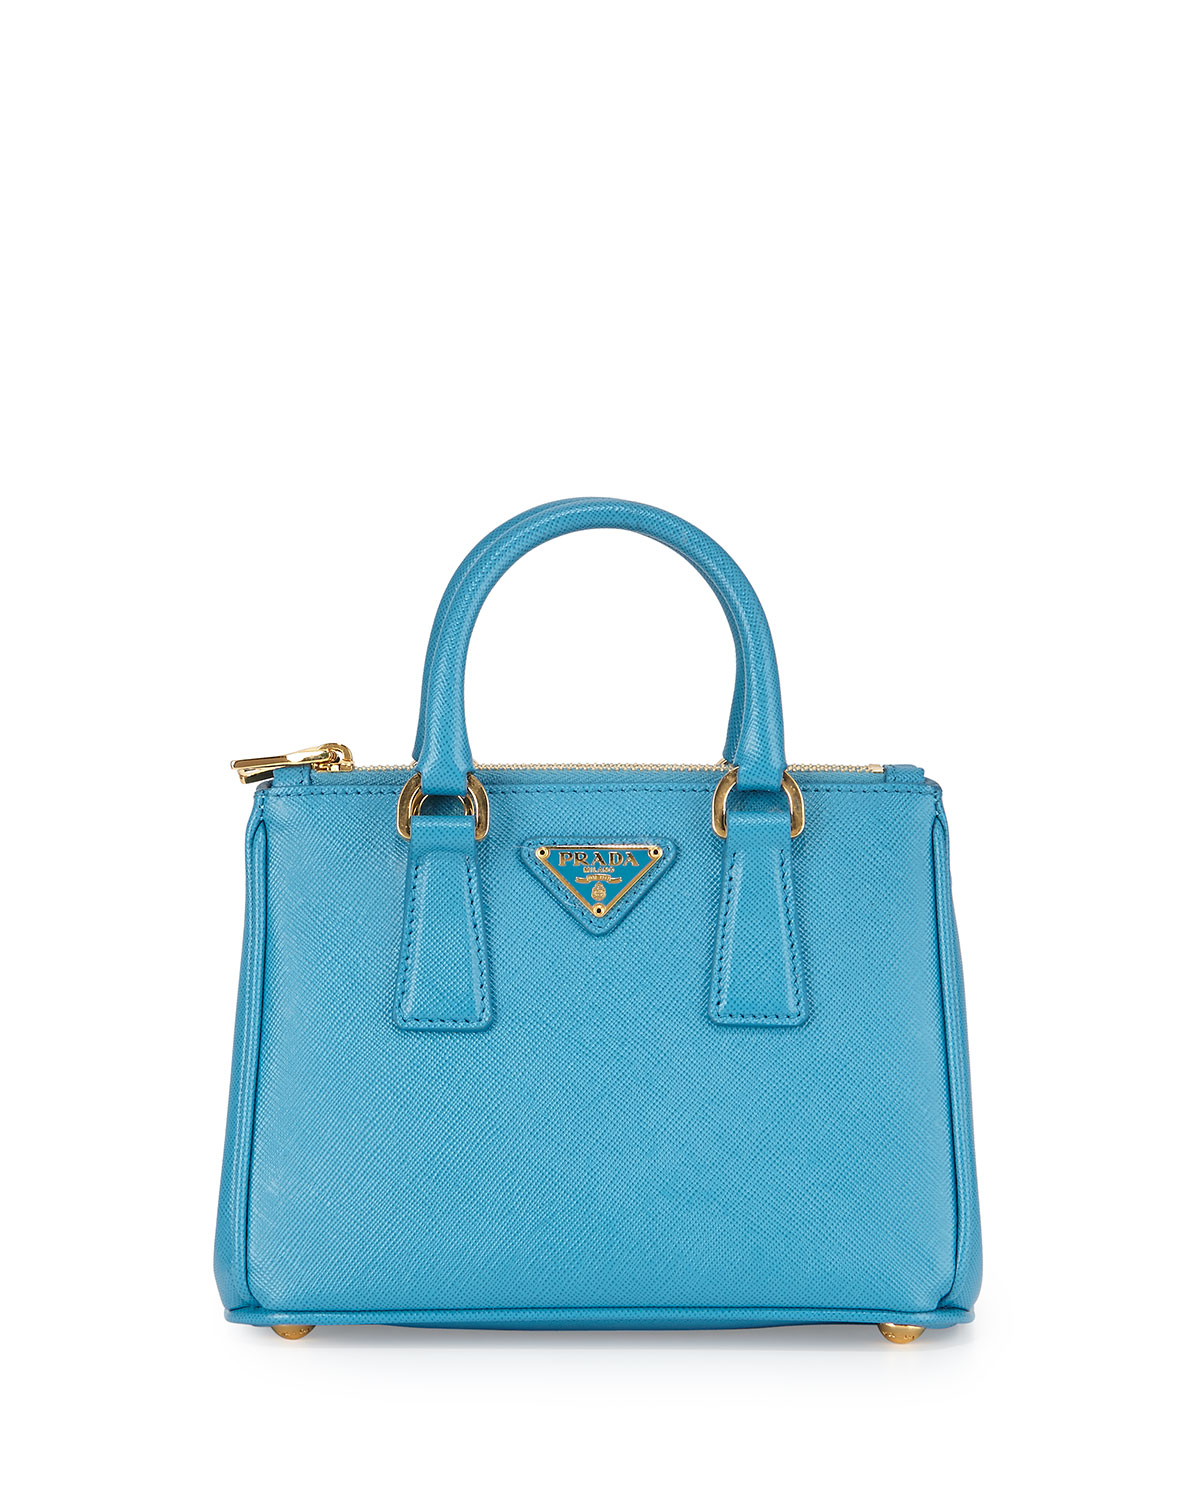 Prada Saffiano Mini Galleria Crossbody Bag in Blue | Lyst